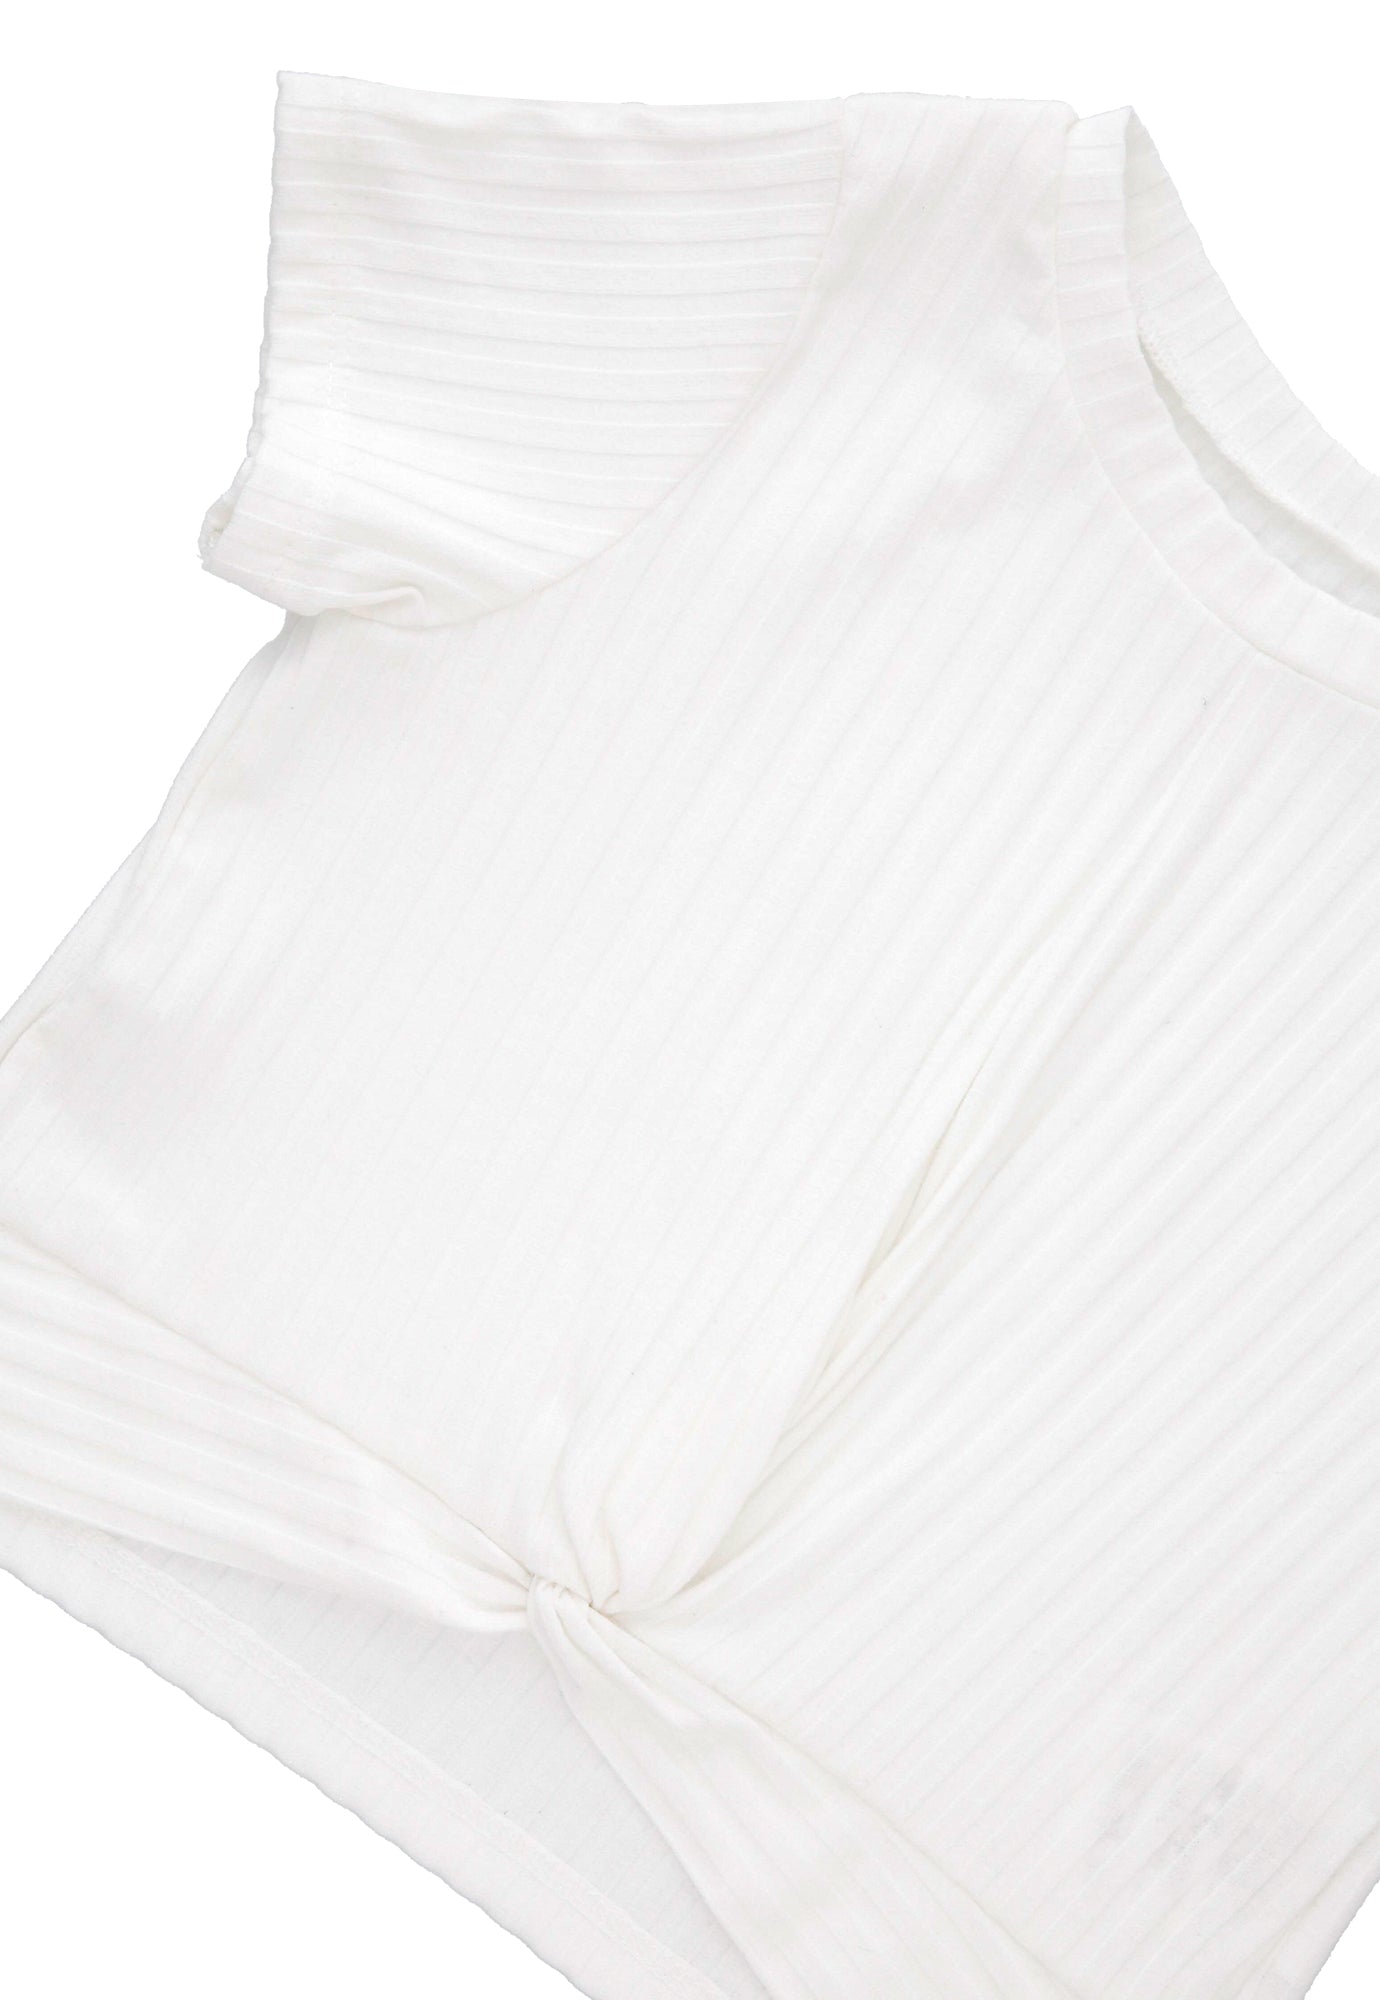 Camiseta ivory fondo entero, con frente entorchado y manga corta para bebé niña